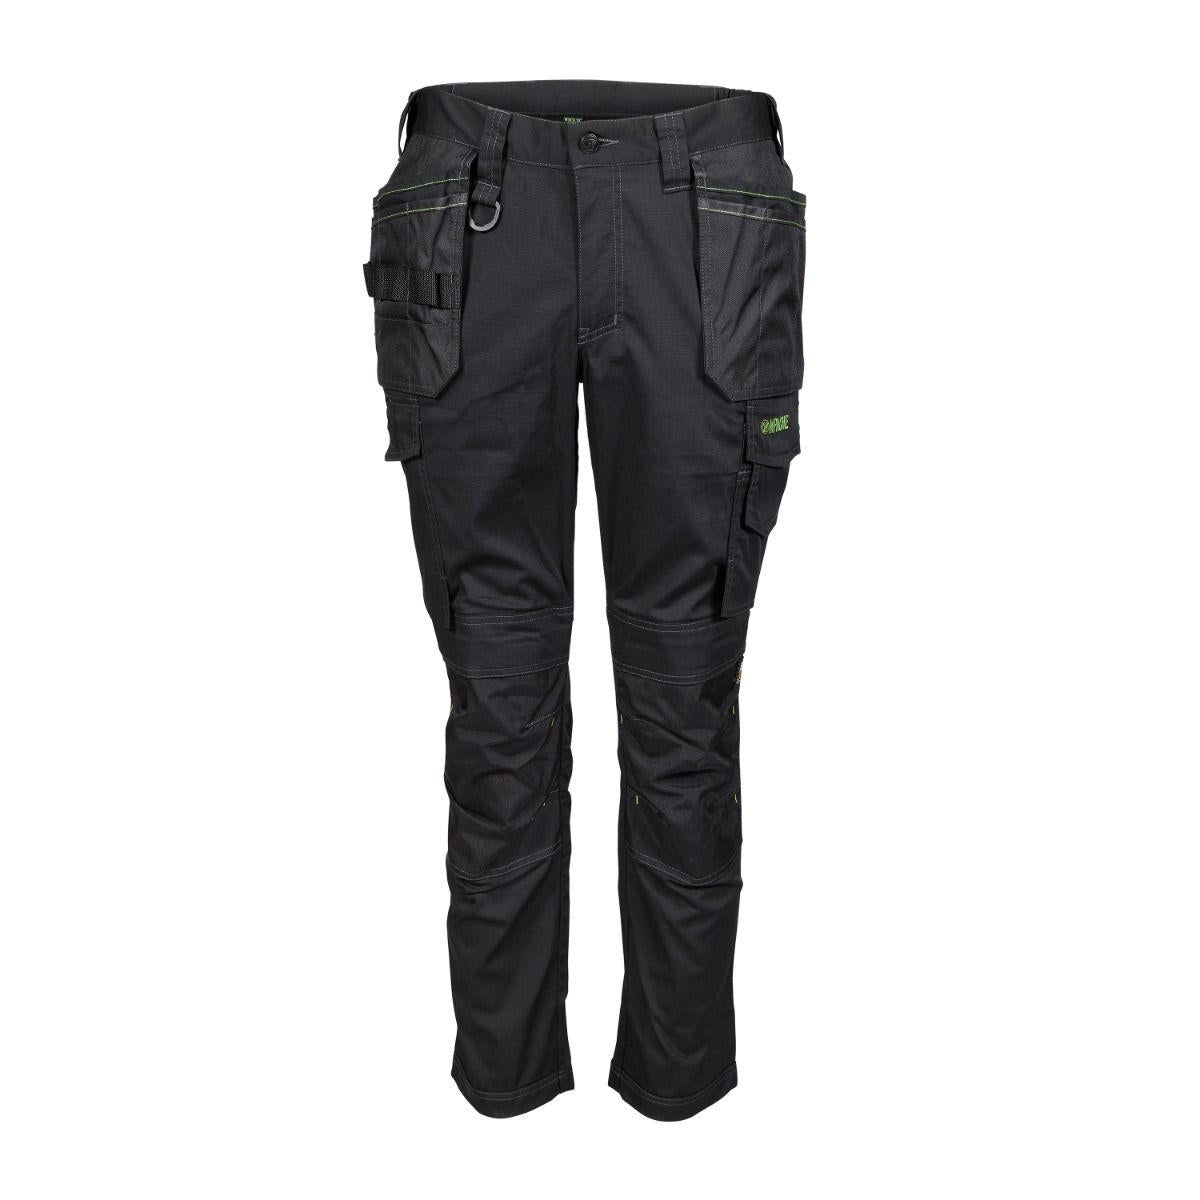 Apache Sudbury black cargo multi pocket stretch slim fit work trousers